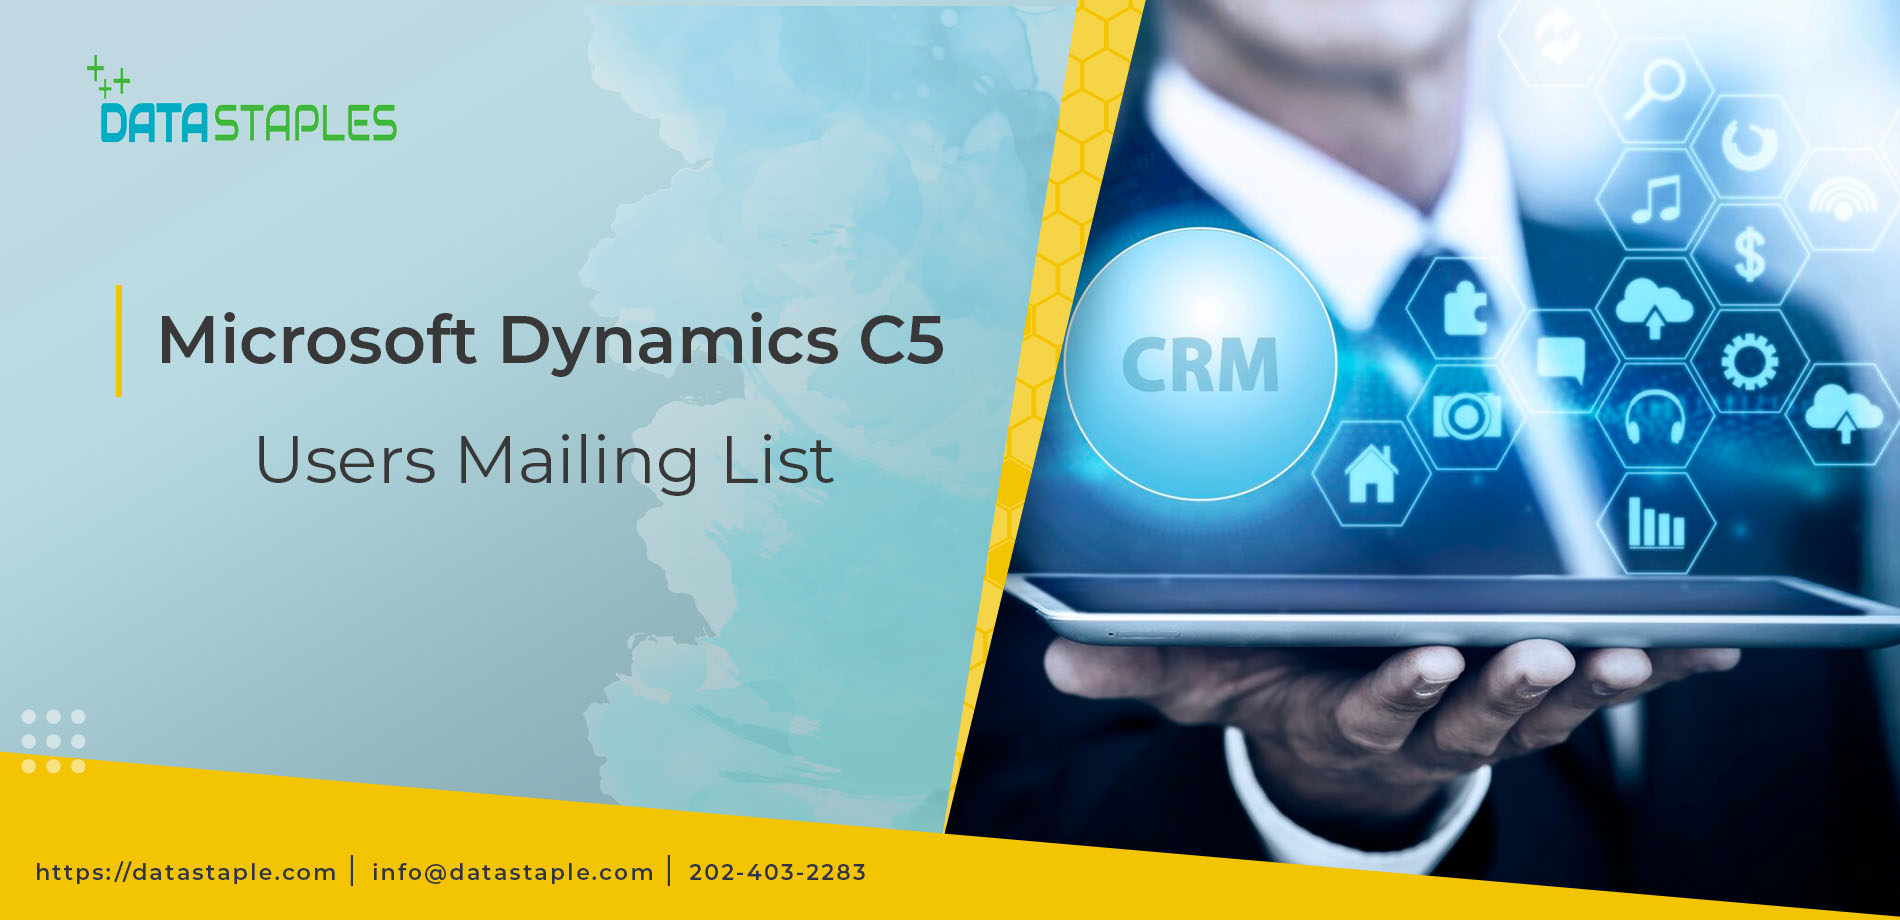 Microsoft Dynamics C5 Users Mailing List | DataStaples